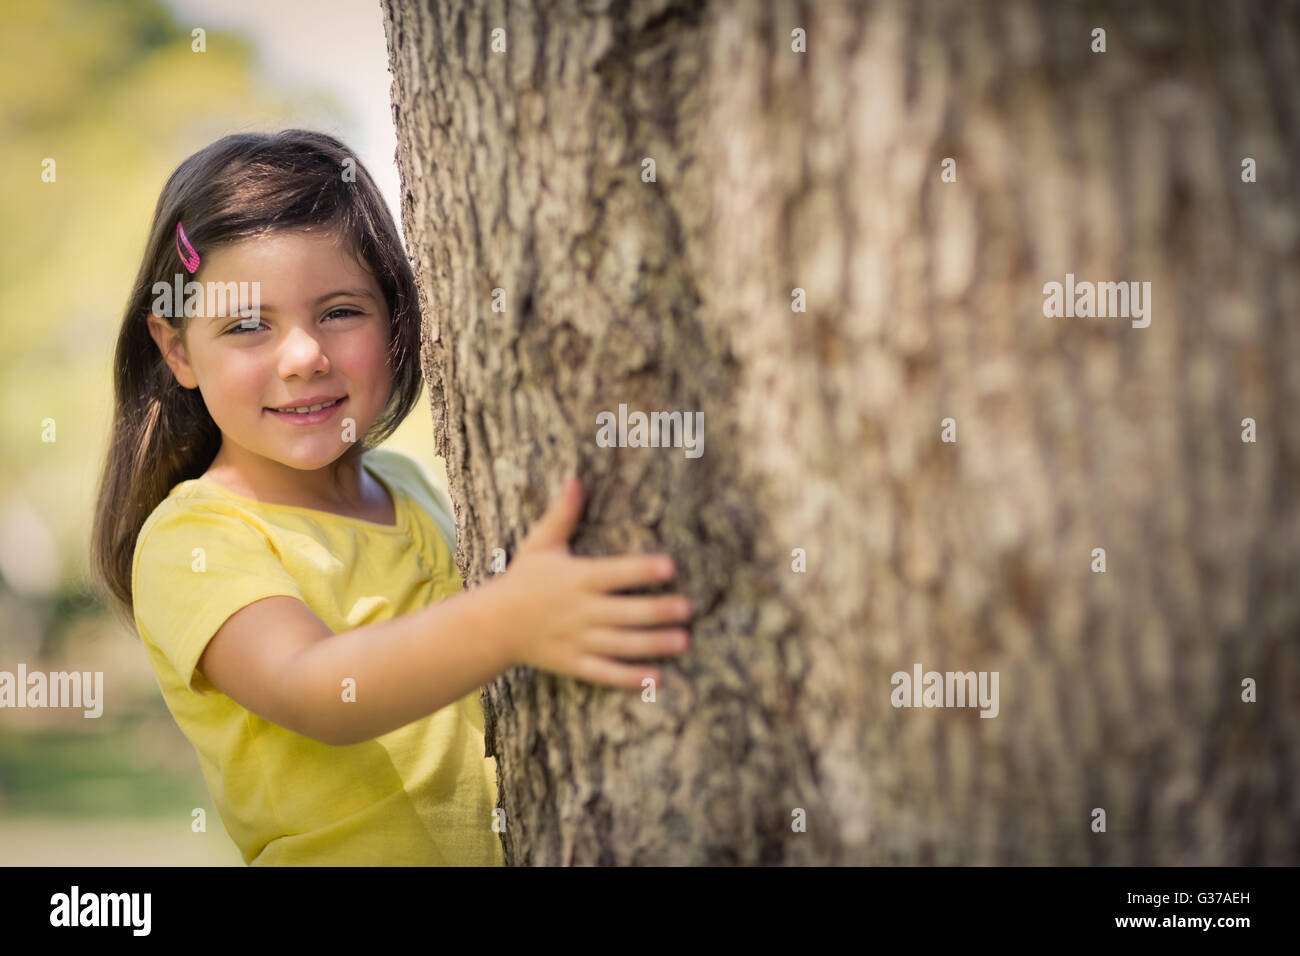 Smiling girl hugging  tree trunk in park Stock Photo